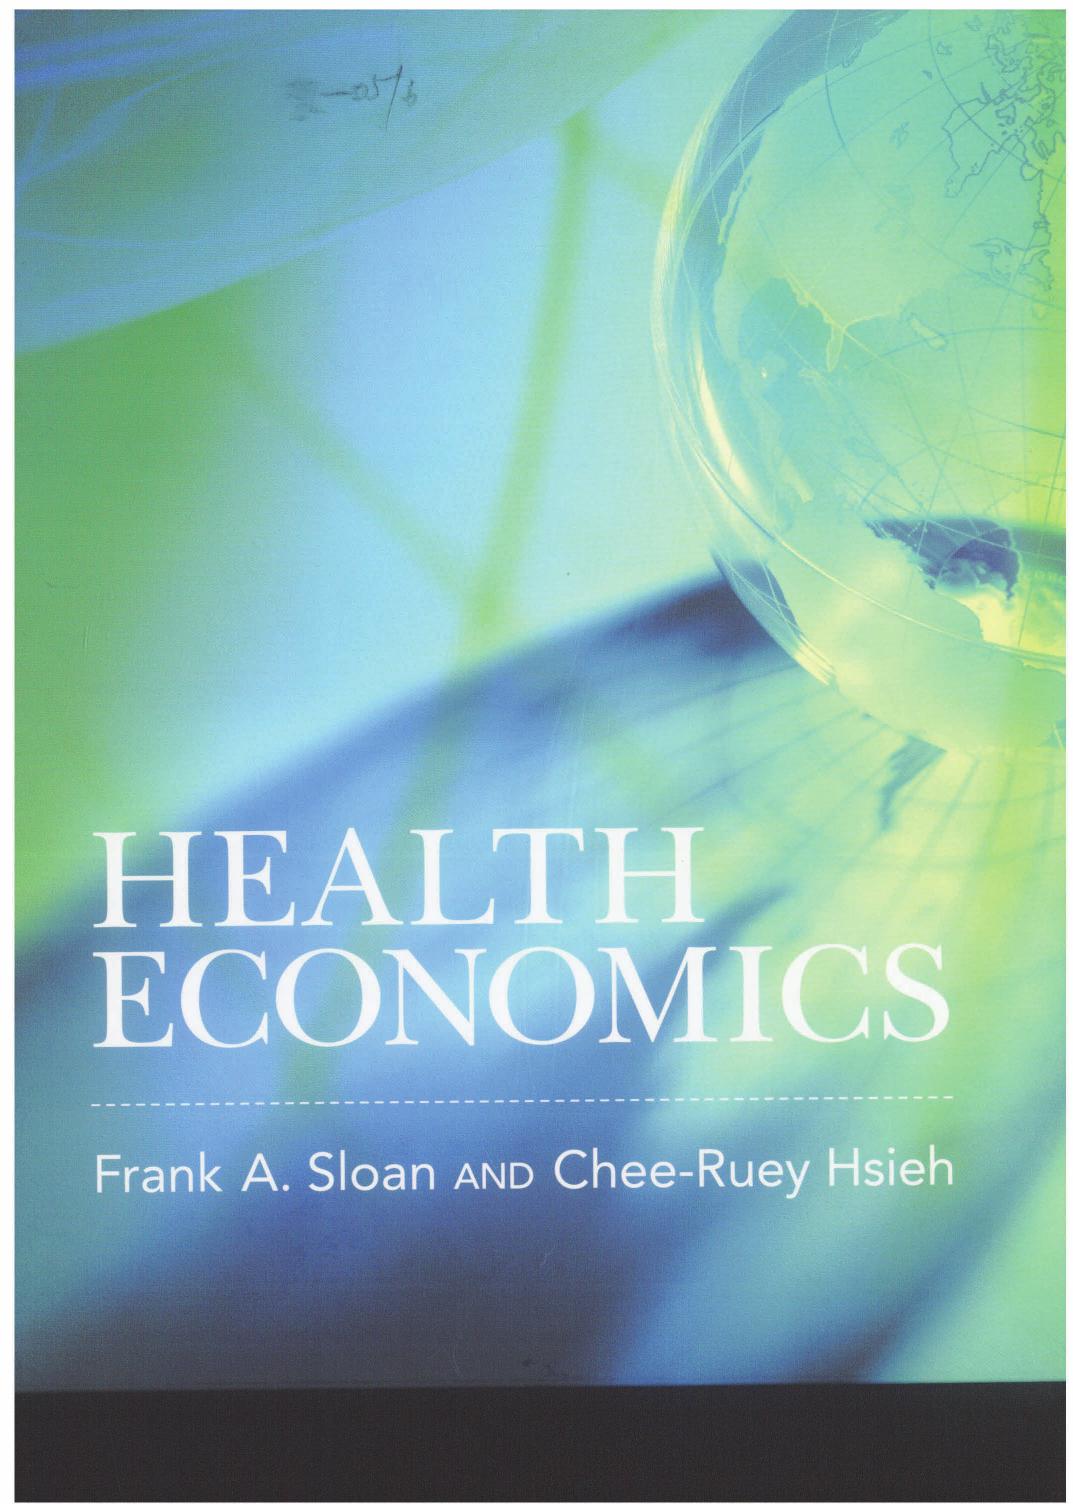 Health Economics by Frank A. Sloan.jpg